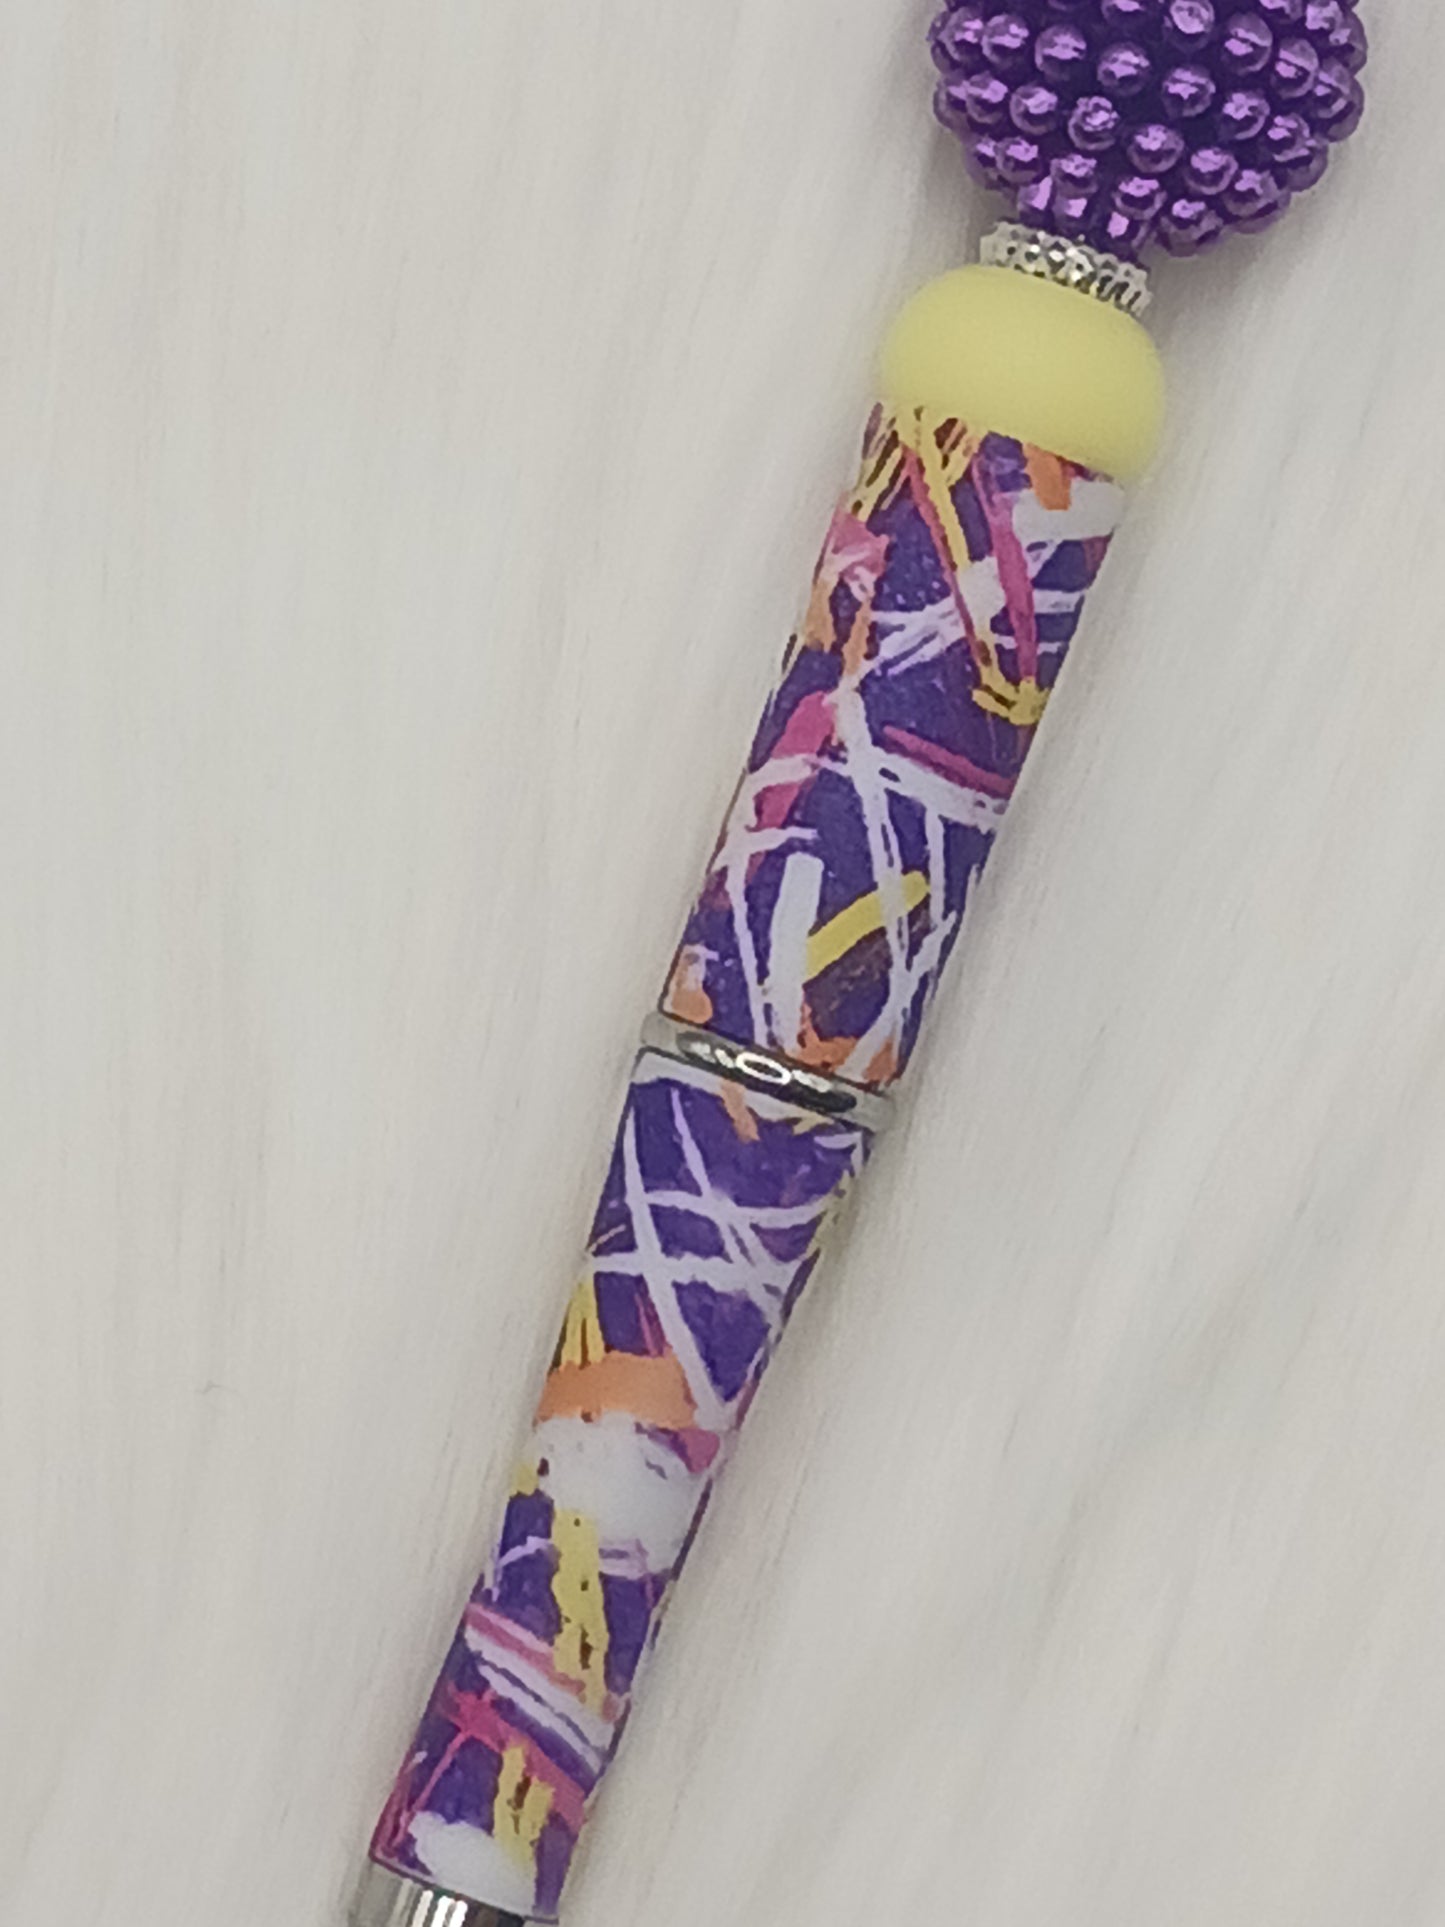 Colorful handmade beaded pen